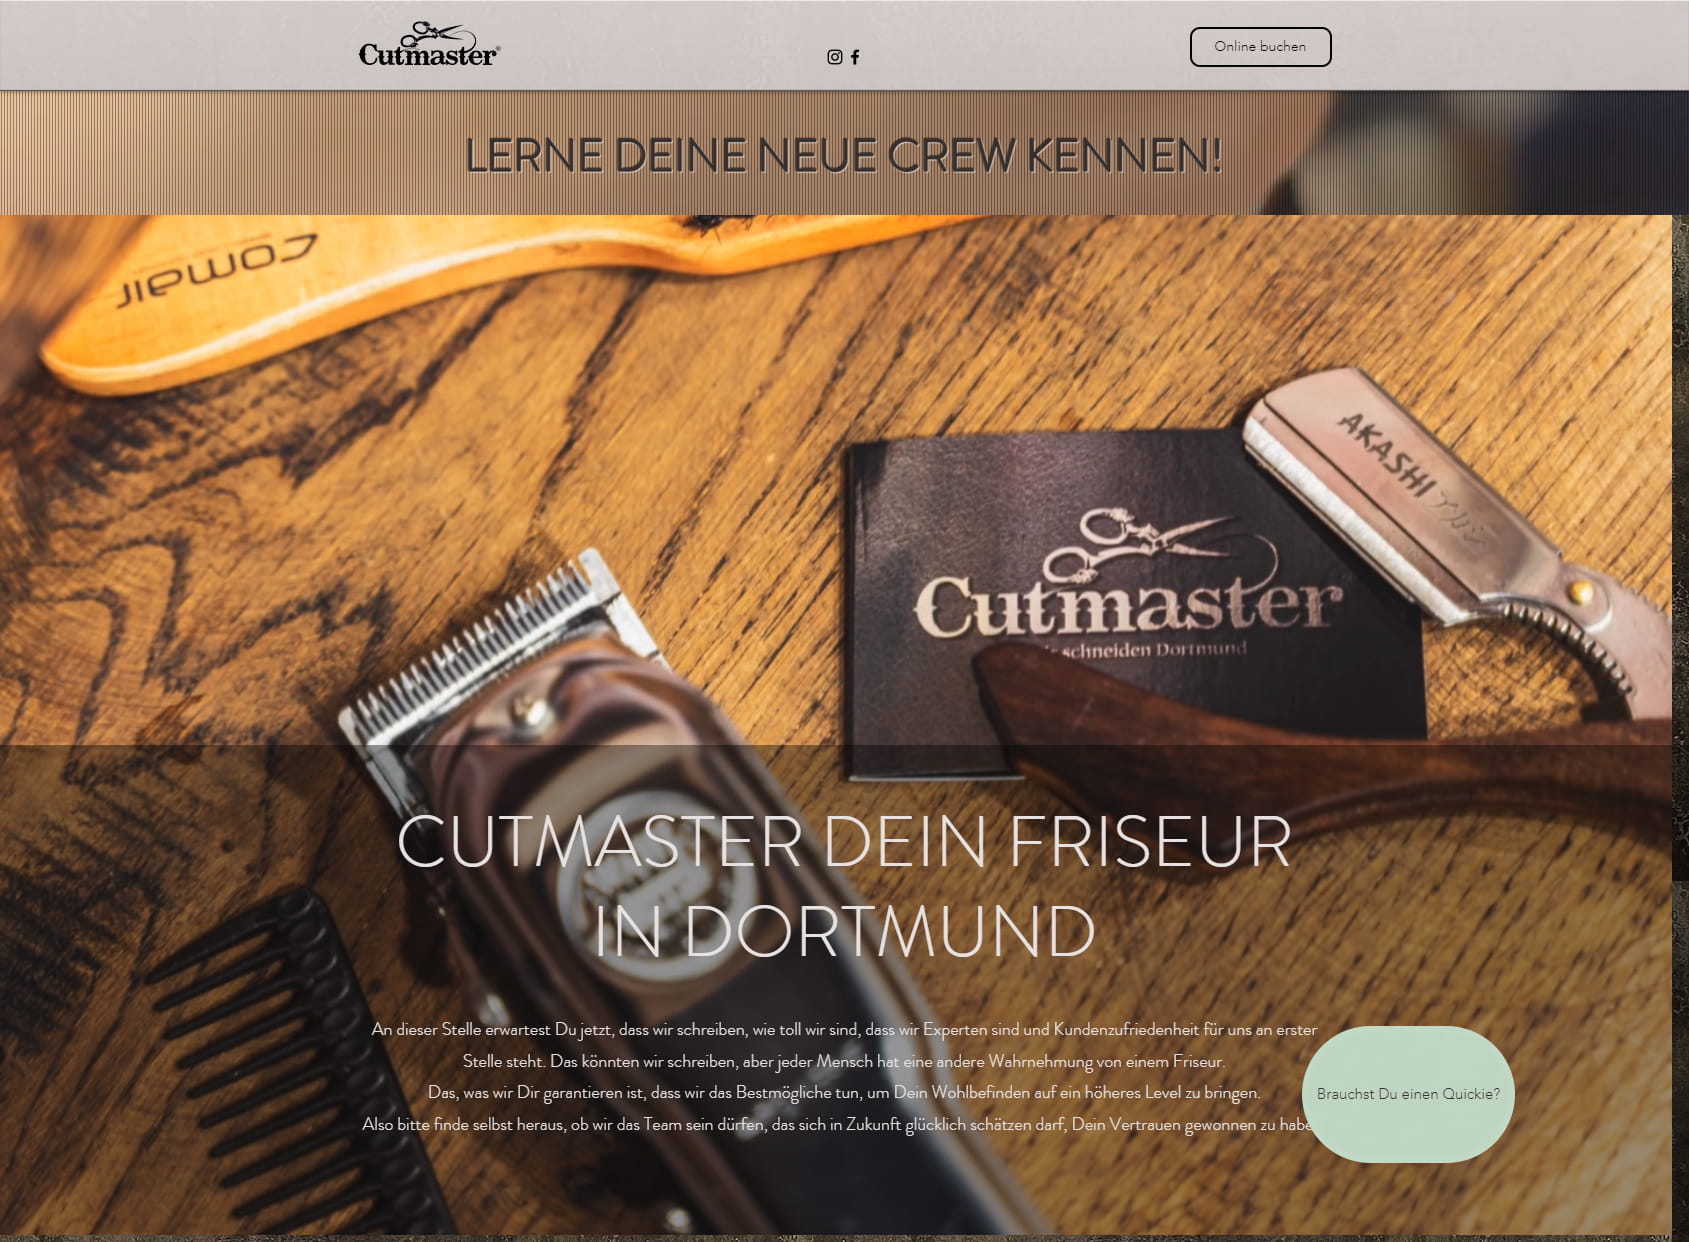 Cutmaster - Friseur Dortmund